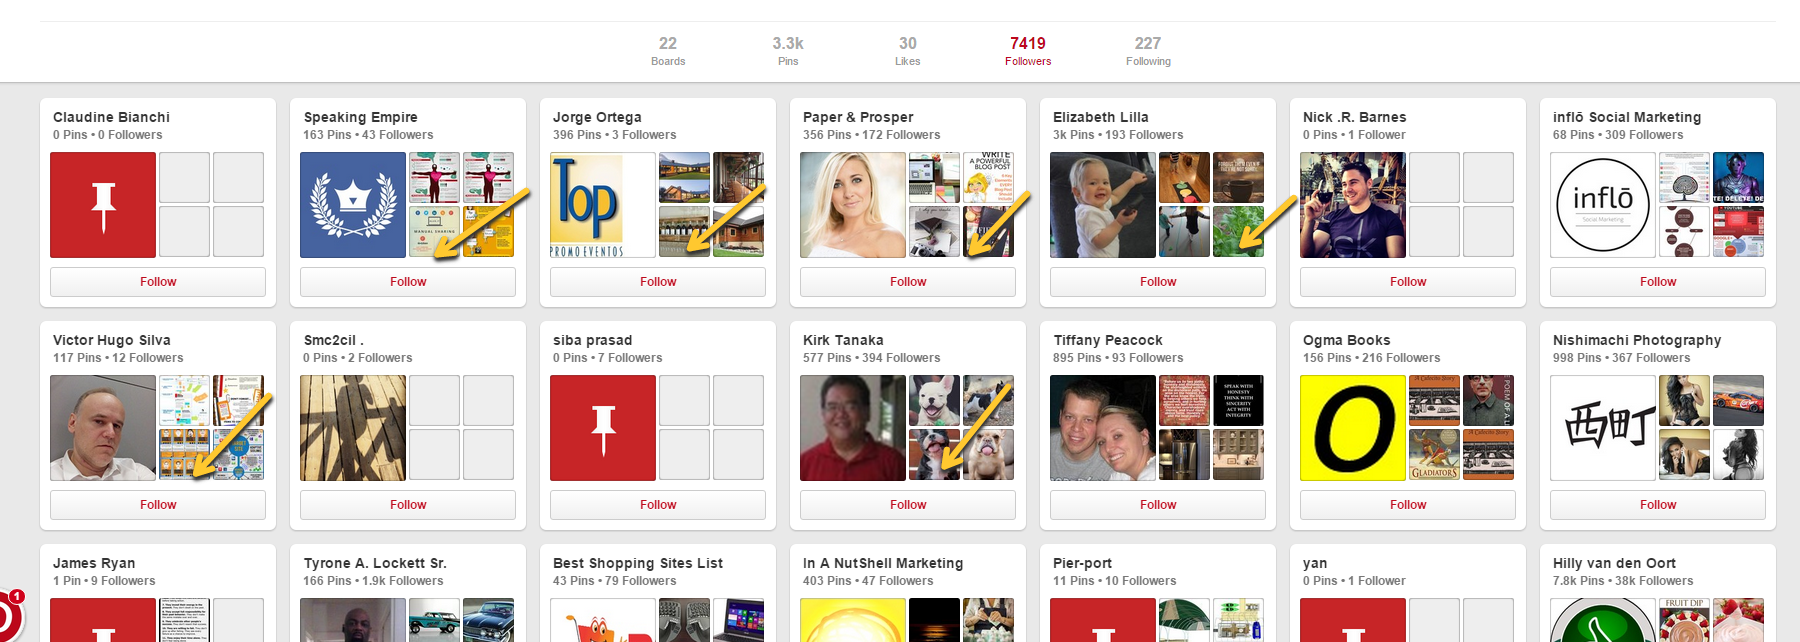 Pinterest profile followers data.